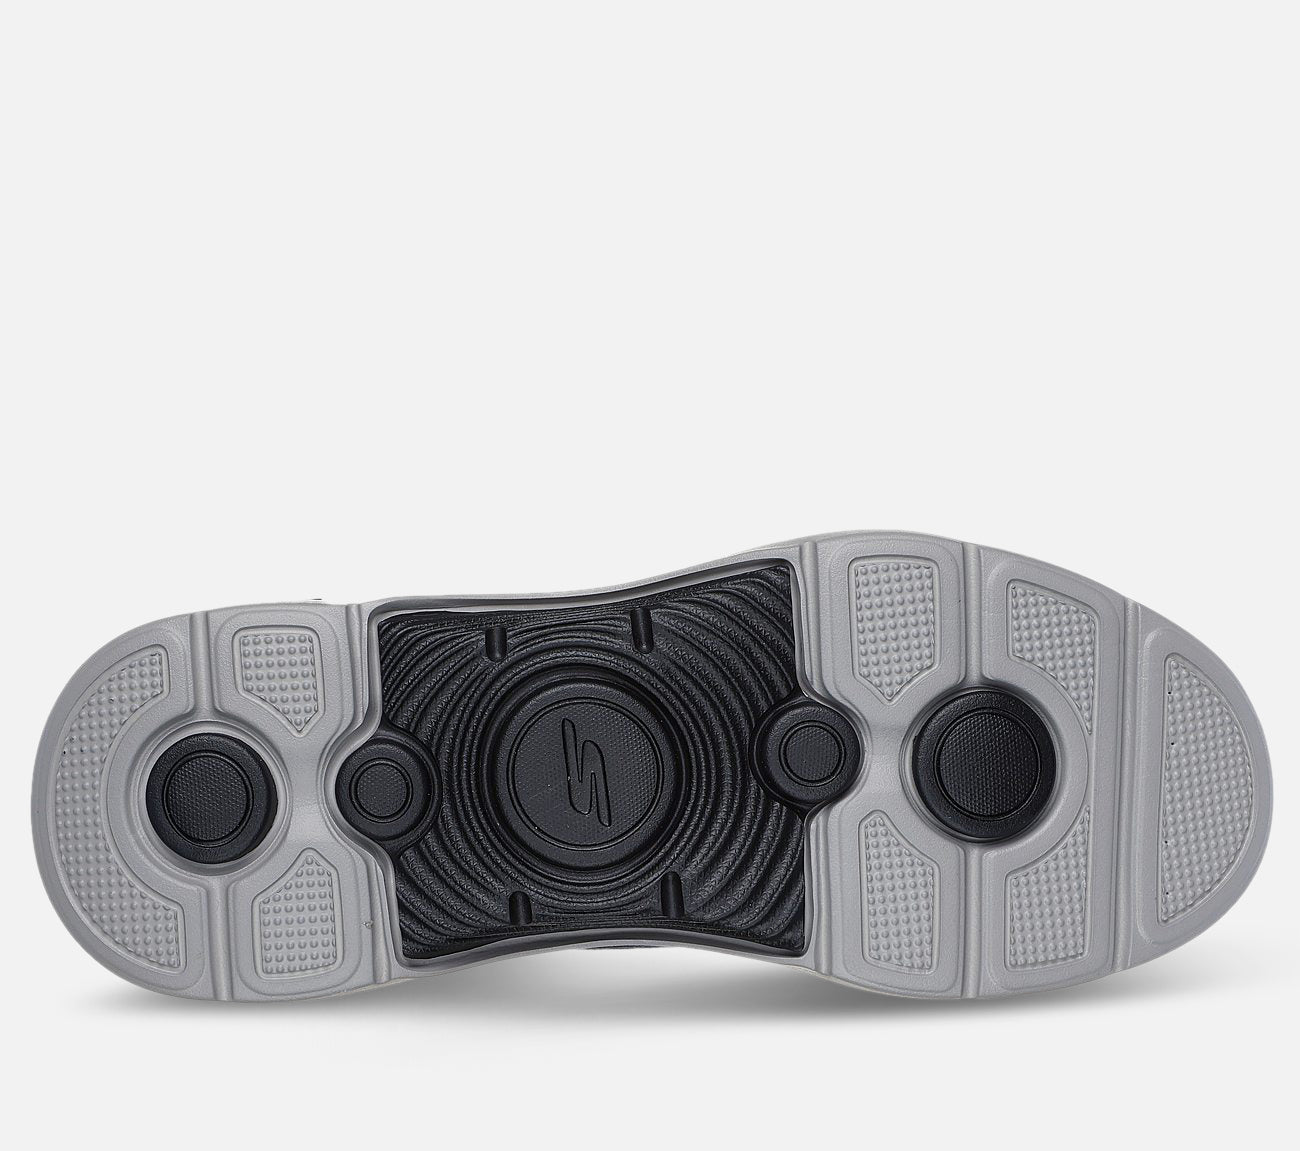 Slip-ins: GO WALK Arch Fit 2.0 - Grand Shoe Skechers